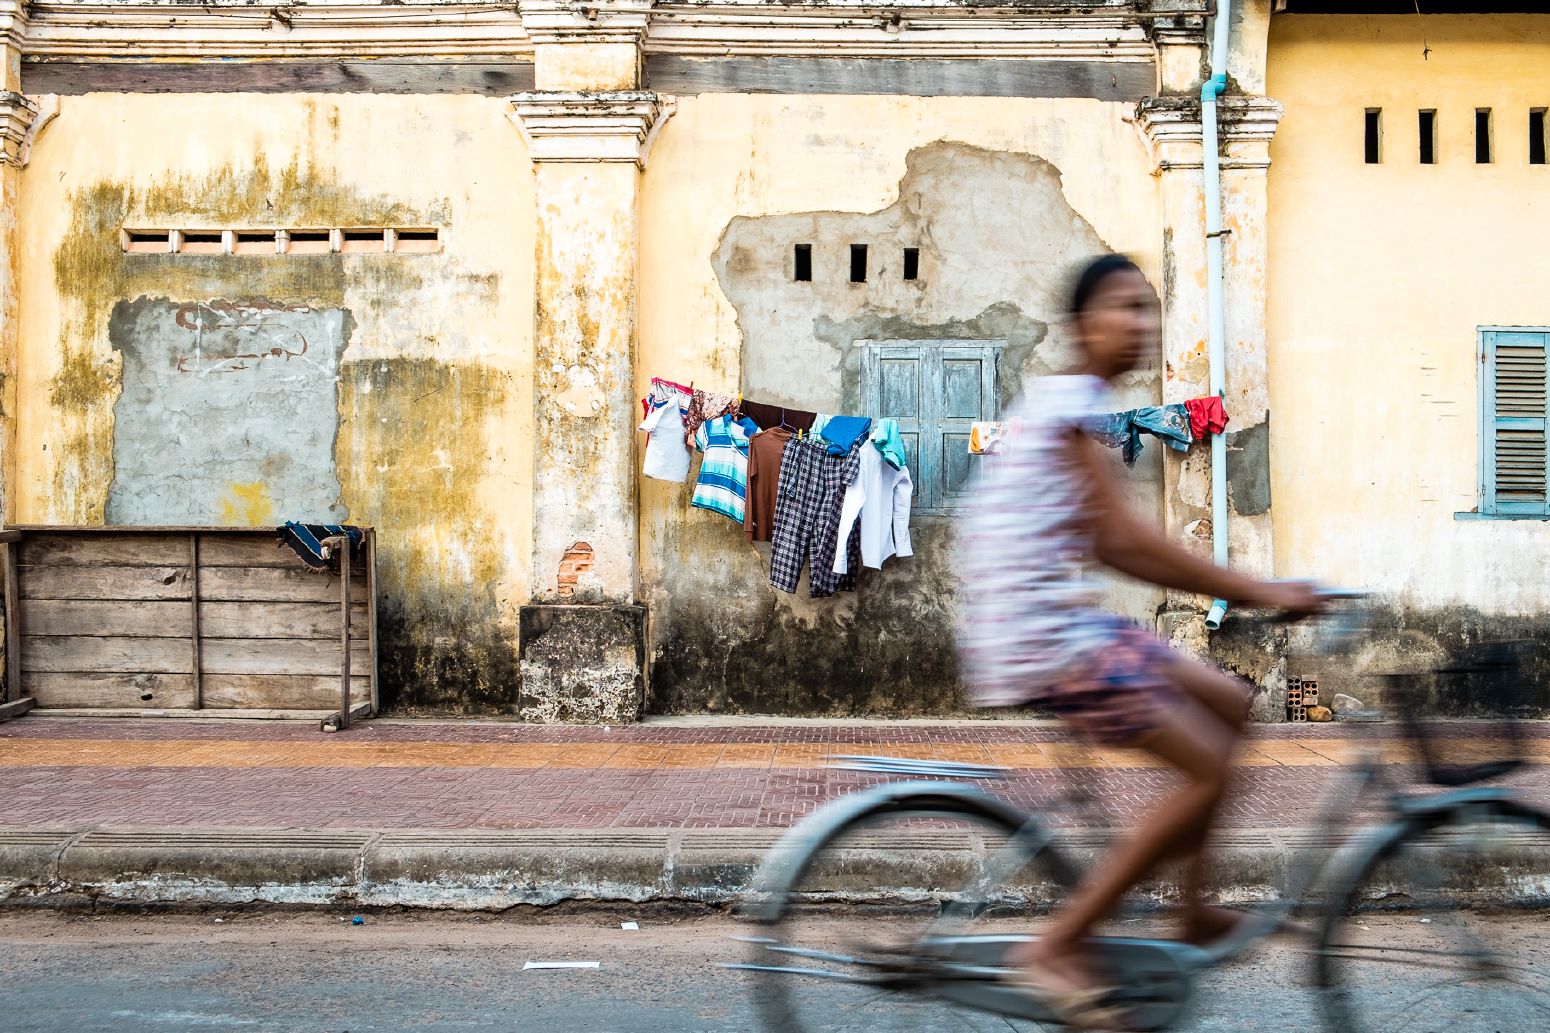 Girl on a bike in Kampot. Kampot, Cambodia. March 2014